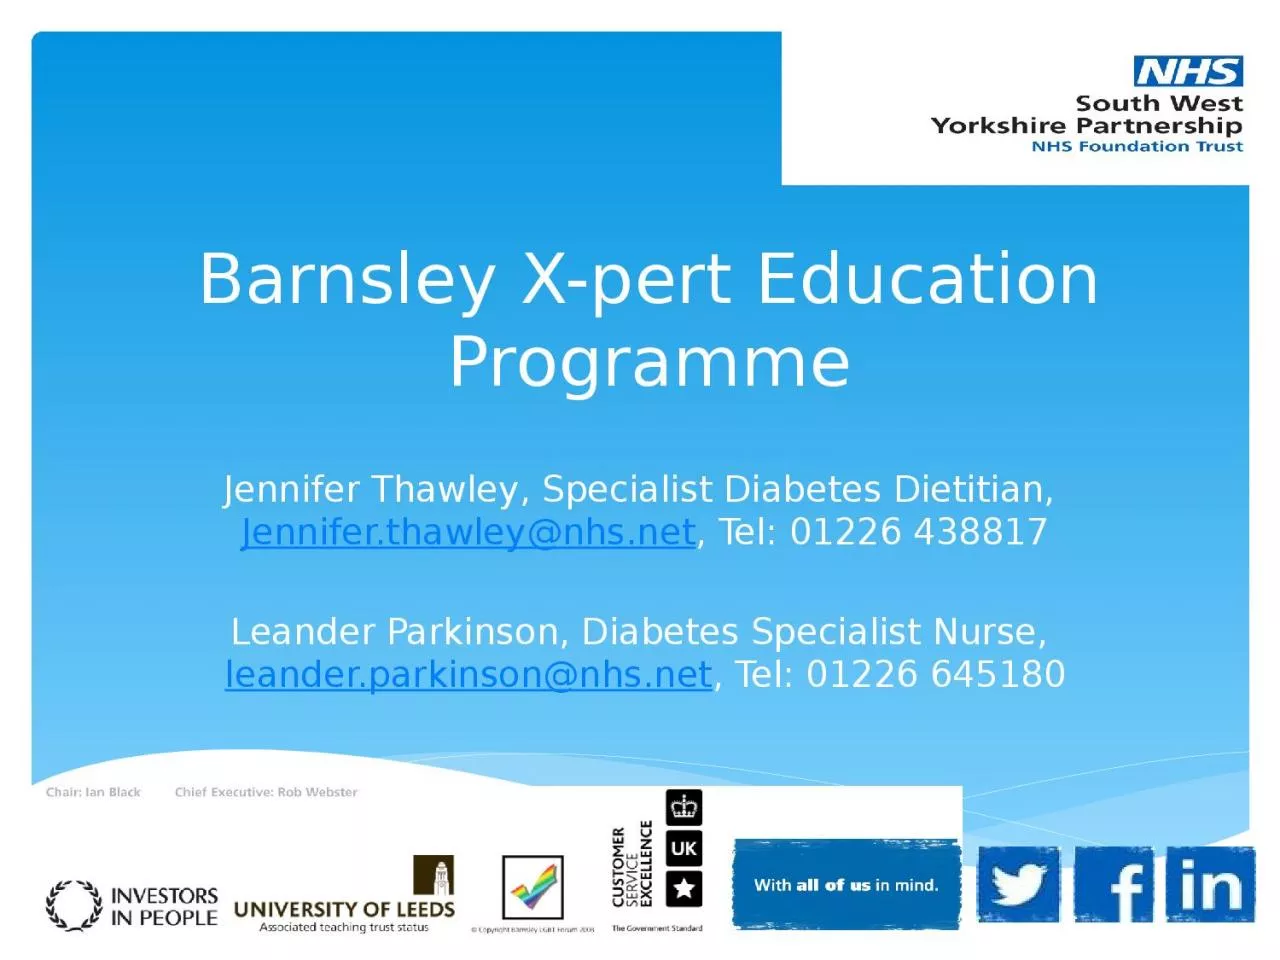 Barnsley X-pert Education Programme